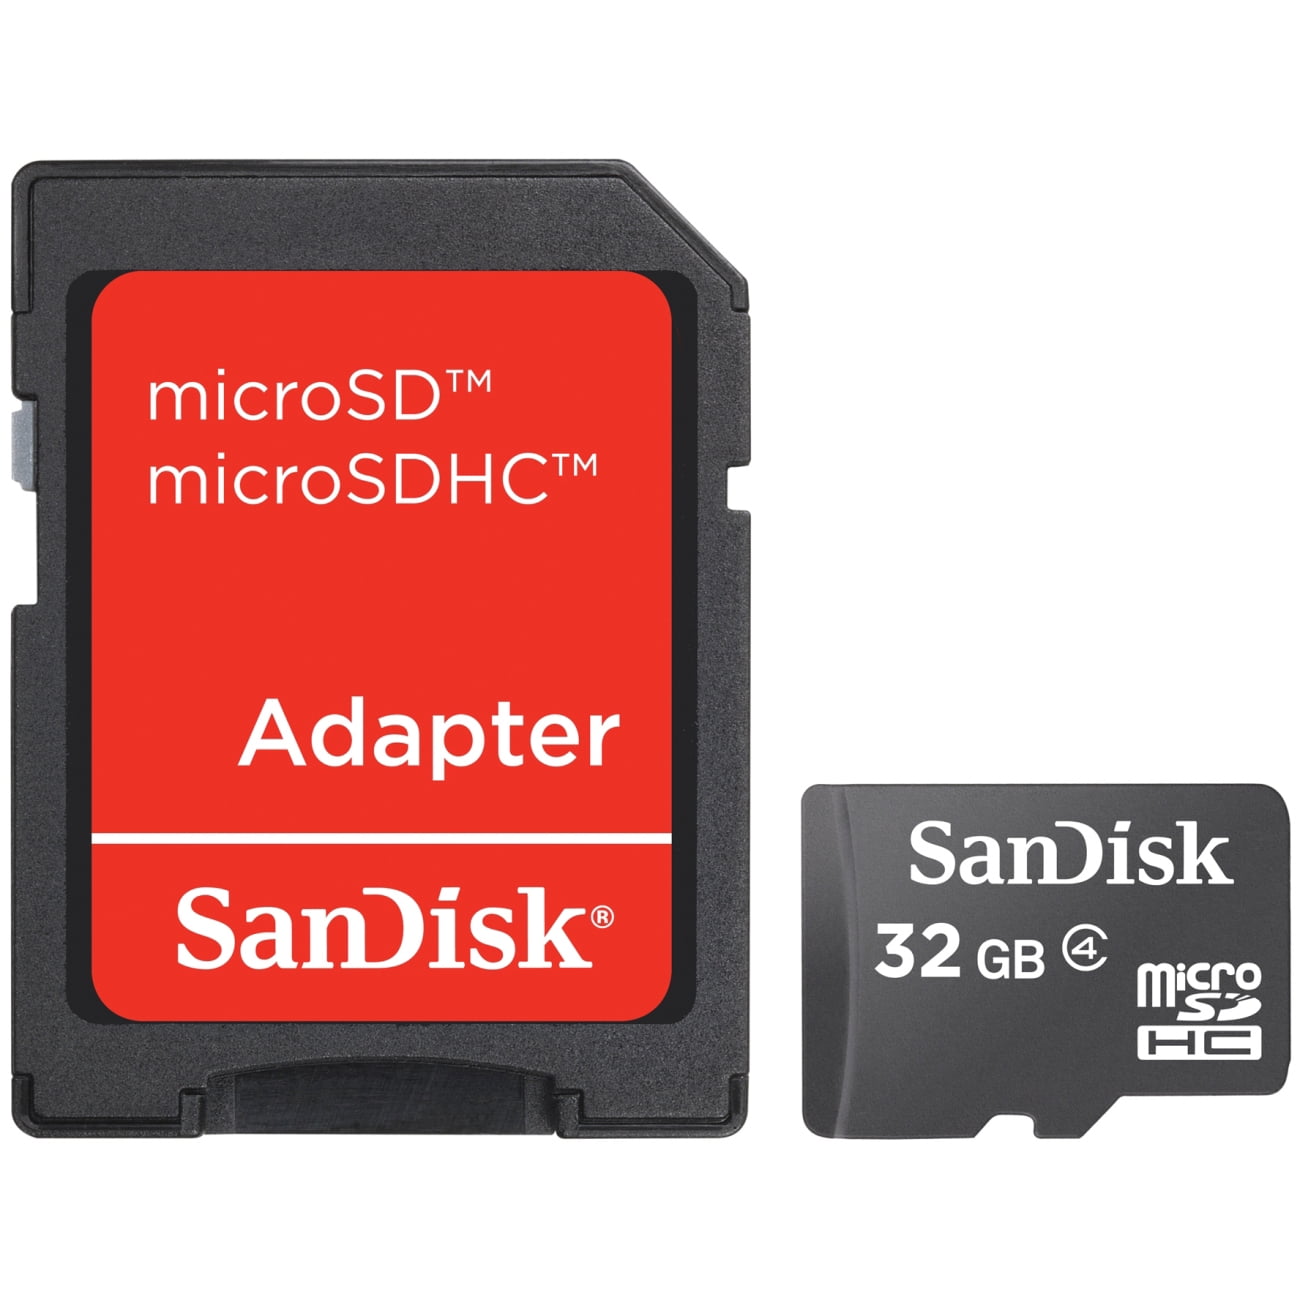 Sandisk 32gb Microsdhc Flash Memory Card With Adapter C4 Full Hd Micro Sd Card Sdsdqm 032g 5a Walmart Com